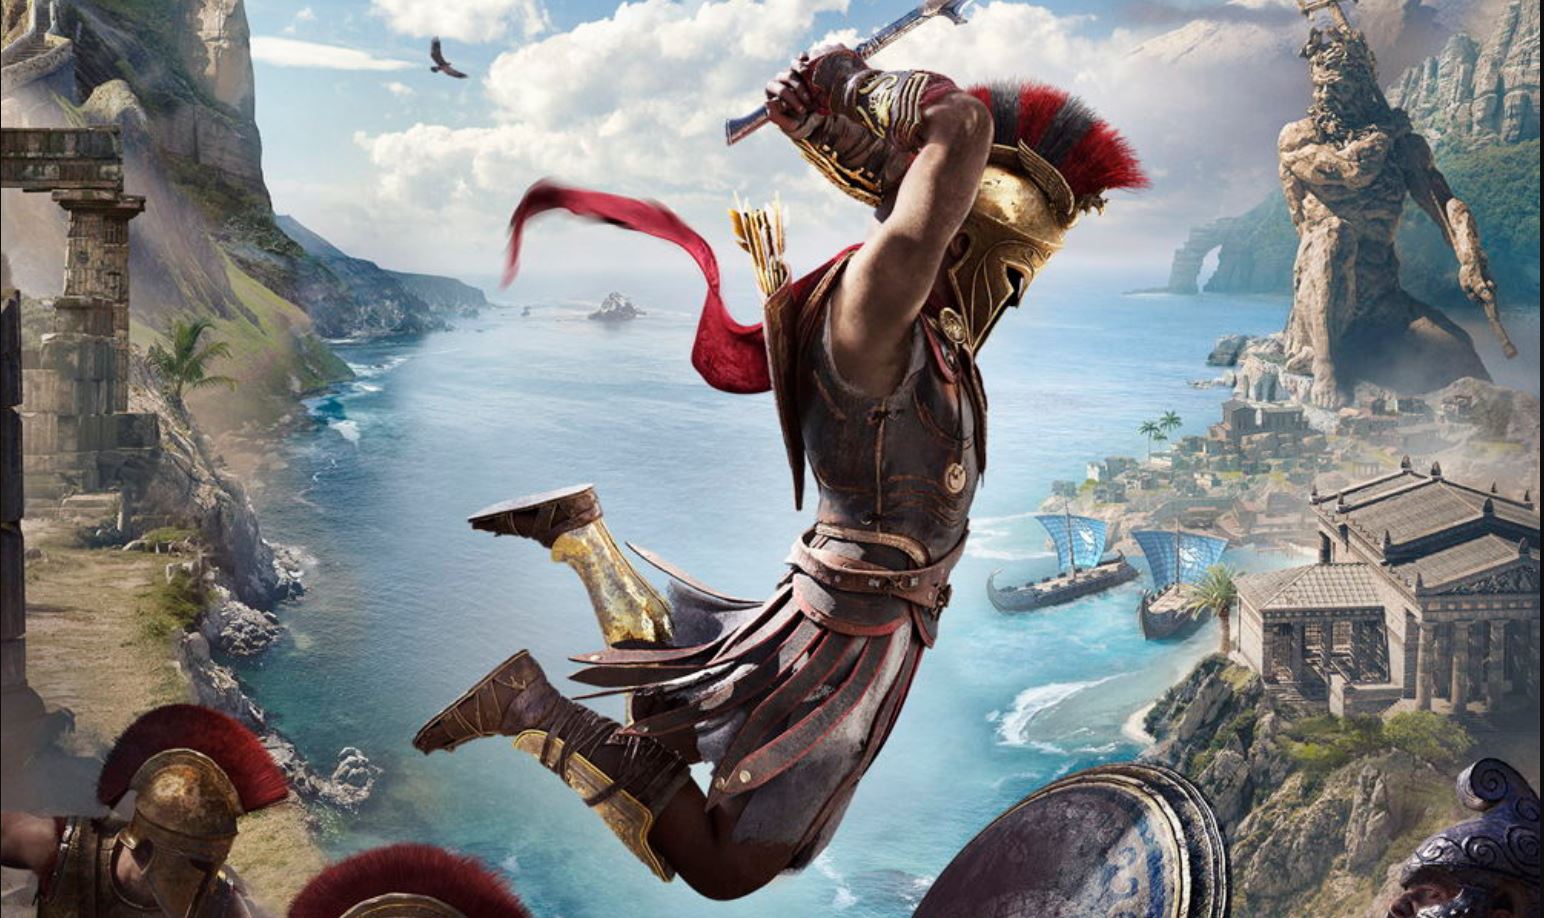 E3 2018 Checa el gameplay de Assassin’s Creed Odyssey - VGEzone.